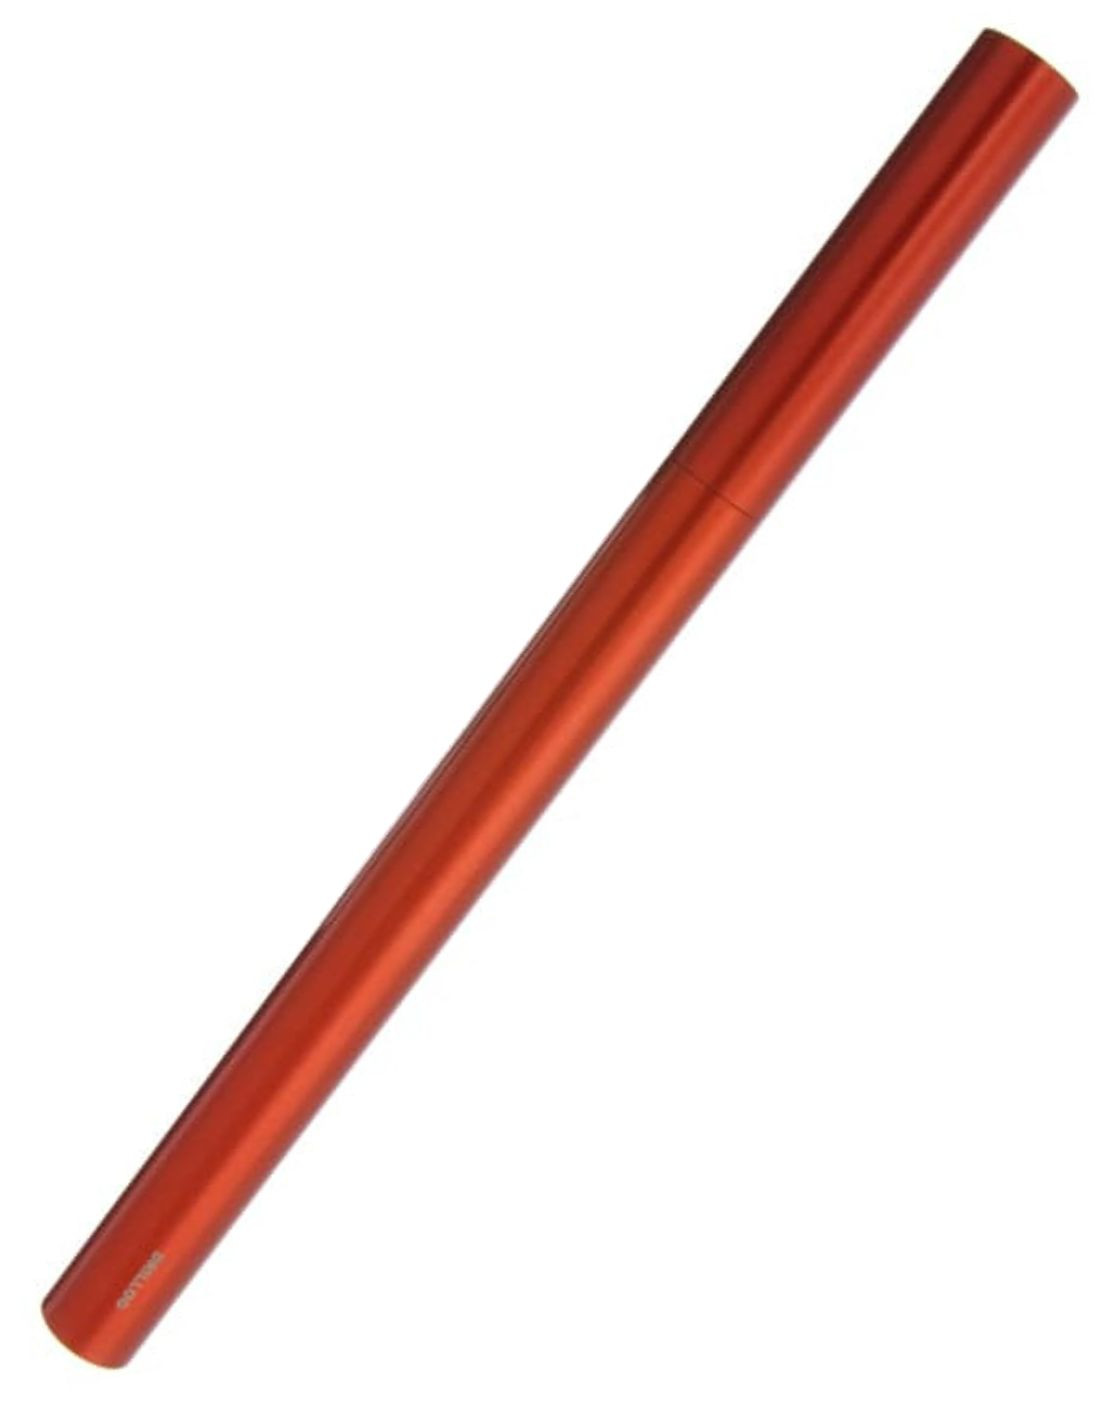 Drillog classical material AL (Long) Nib Holder - Garnet Red